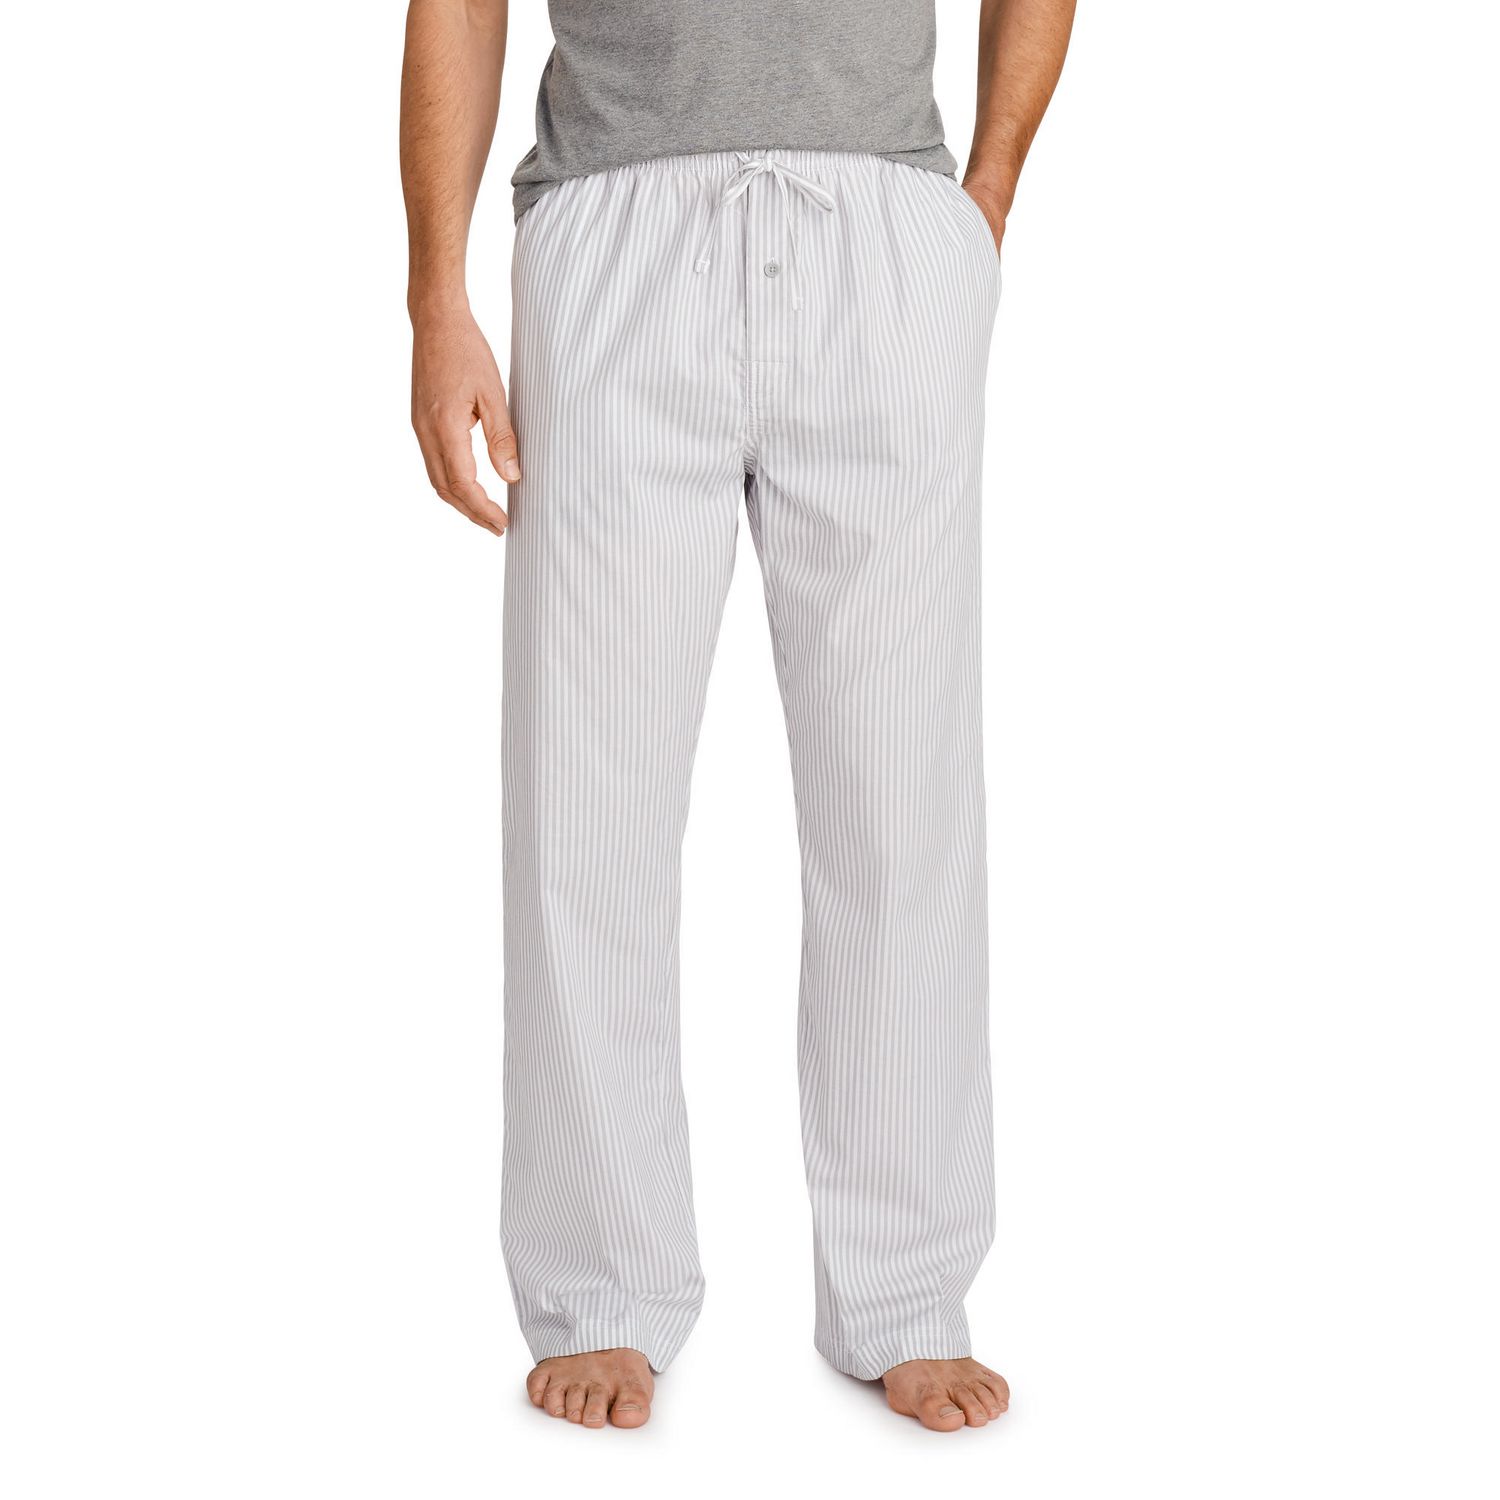 George Men's Cotton Sleep Pants | Walmart Canada